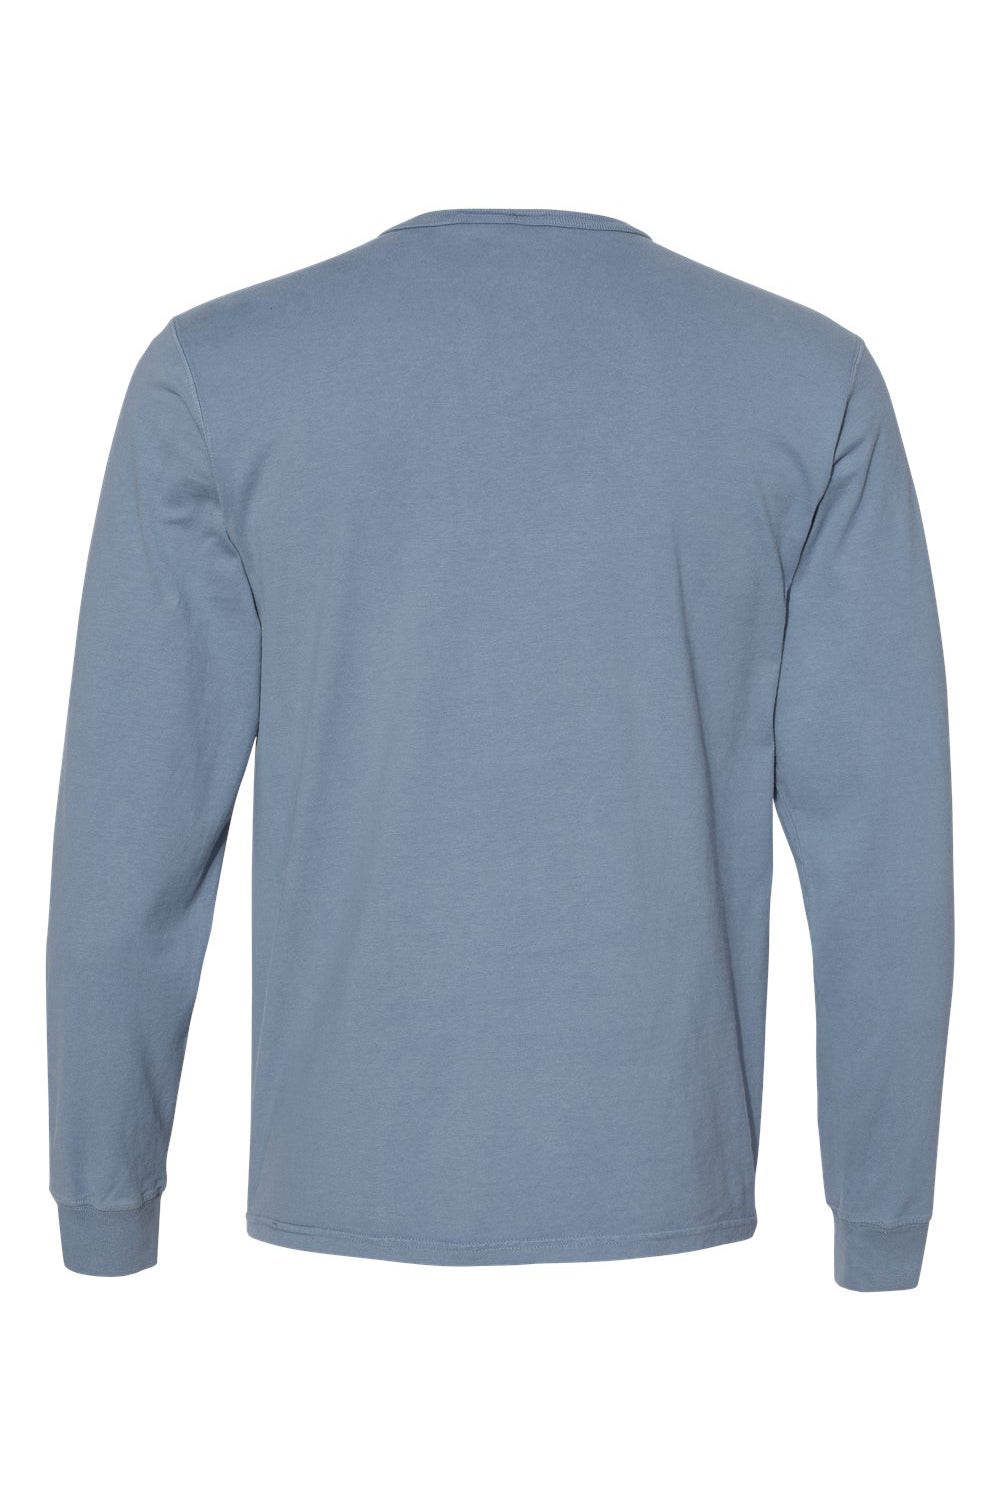 Champion CD200 Mens Garment Dyed Long Sleeve Crewneck T-Shirt Saltwater Blue Flat Back